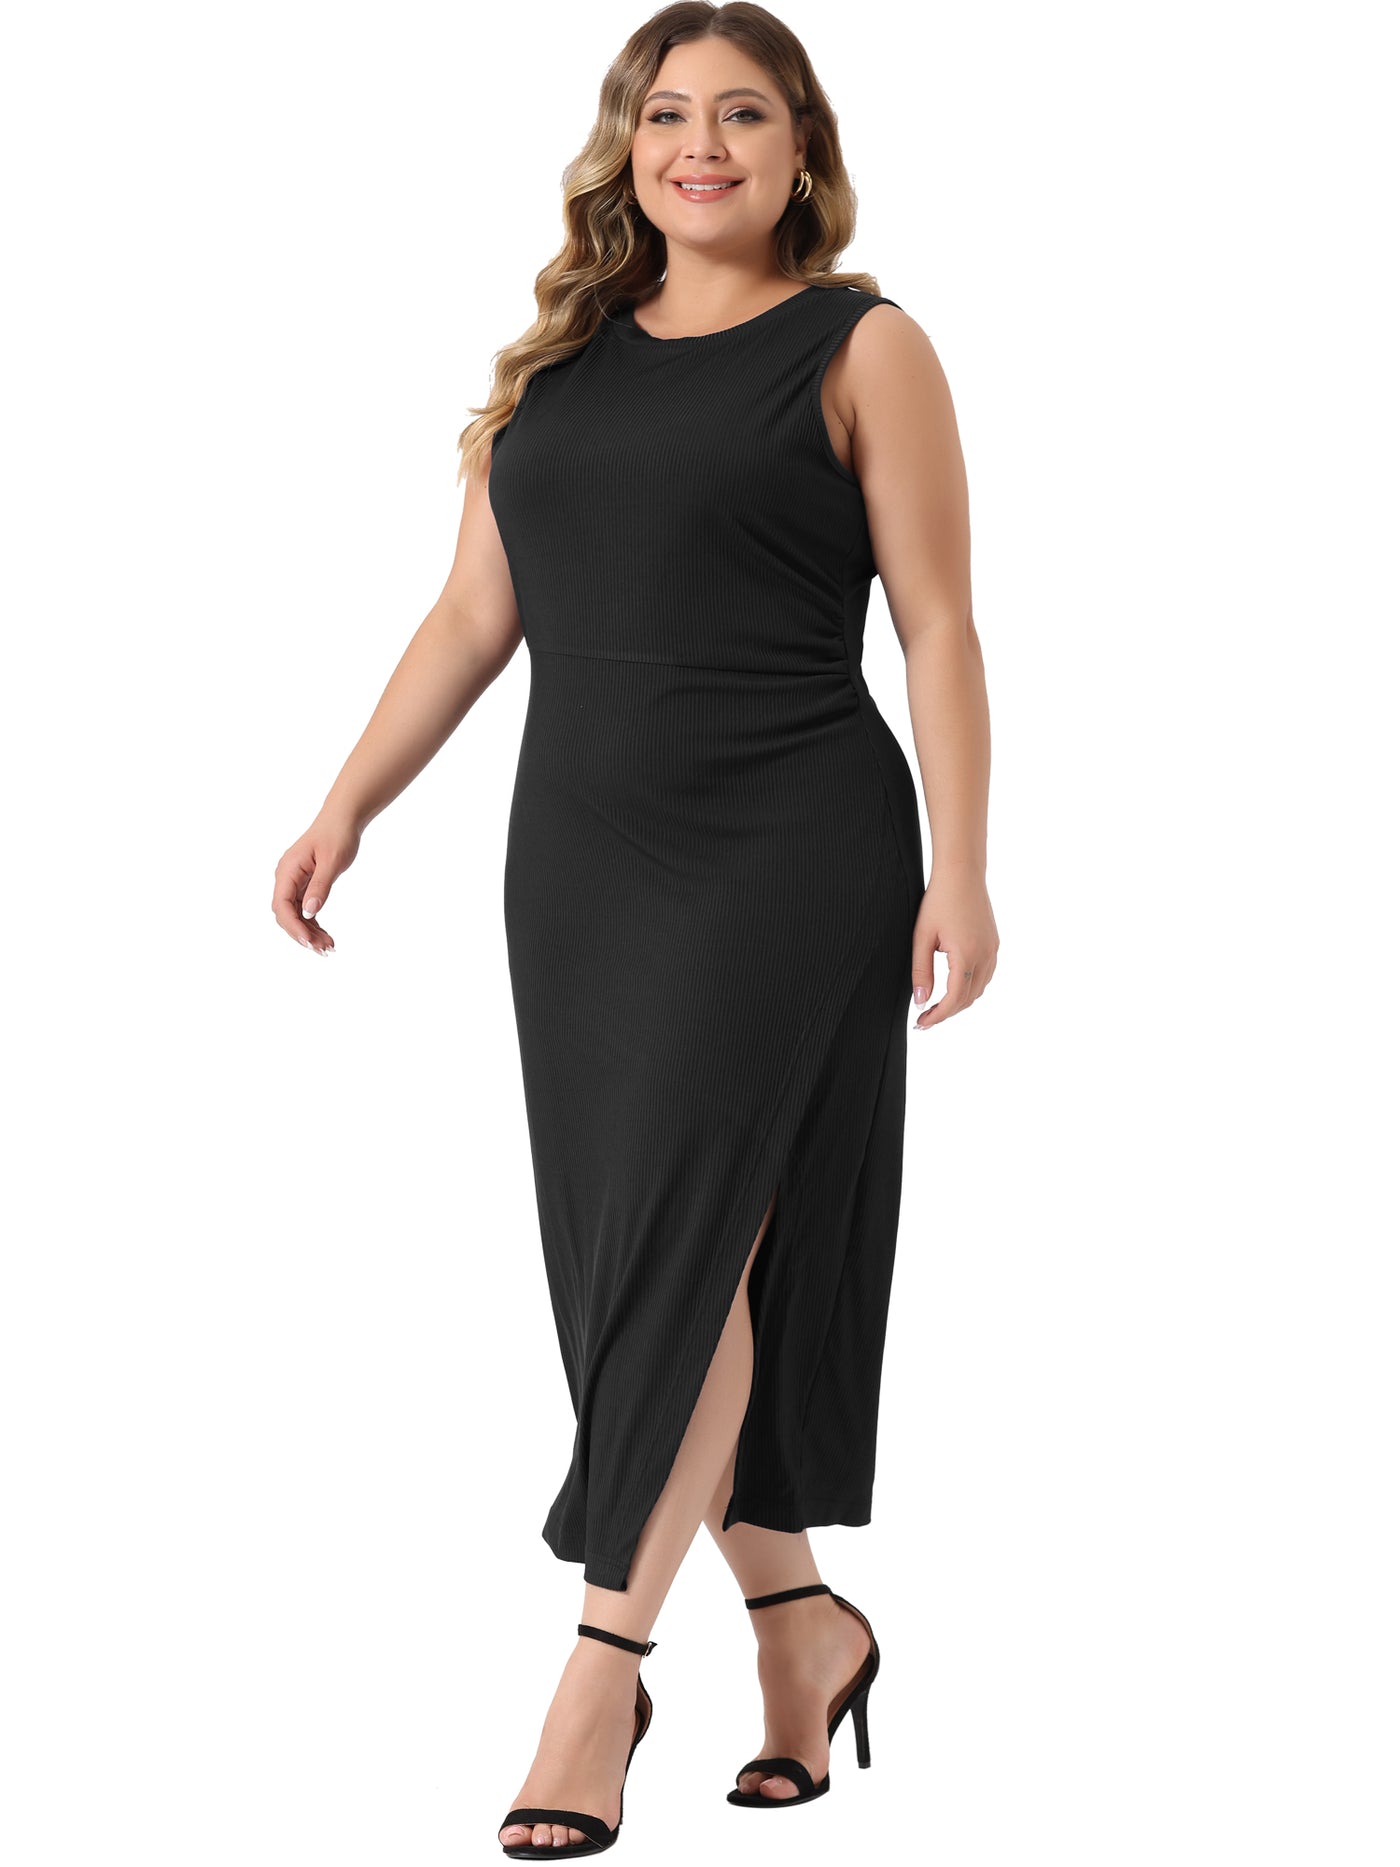 Bublédon Plus Size Bodycon Dress for Women Elegant Knit Slit Tank Midi Ruched Sleeveless Summer Dresses